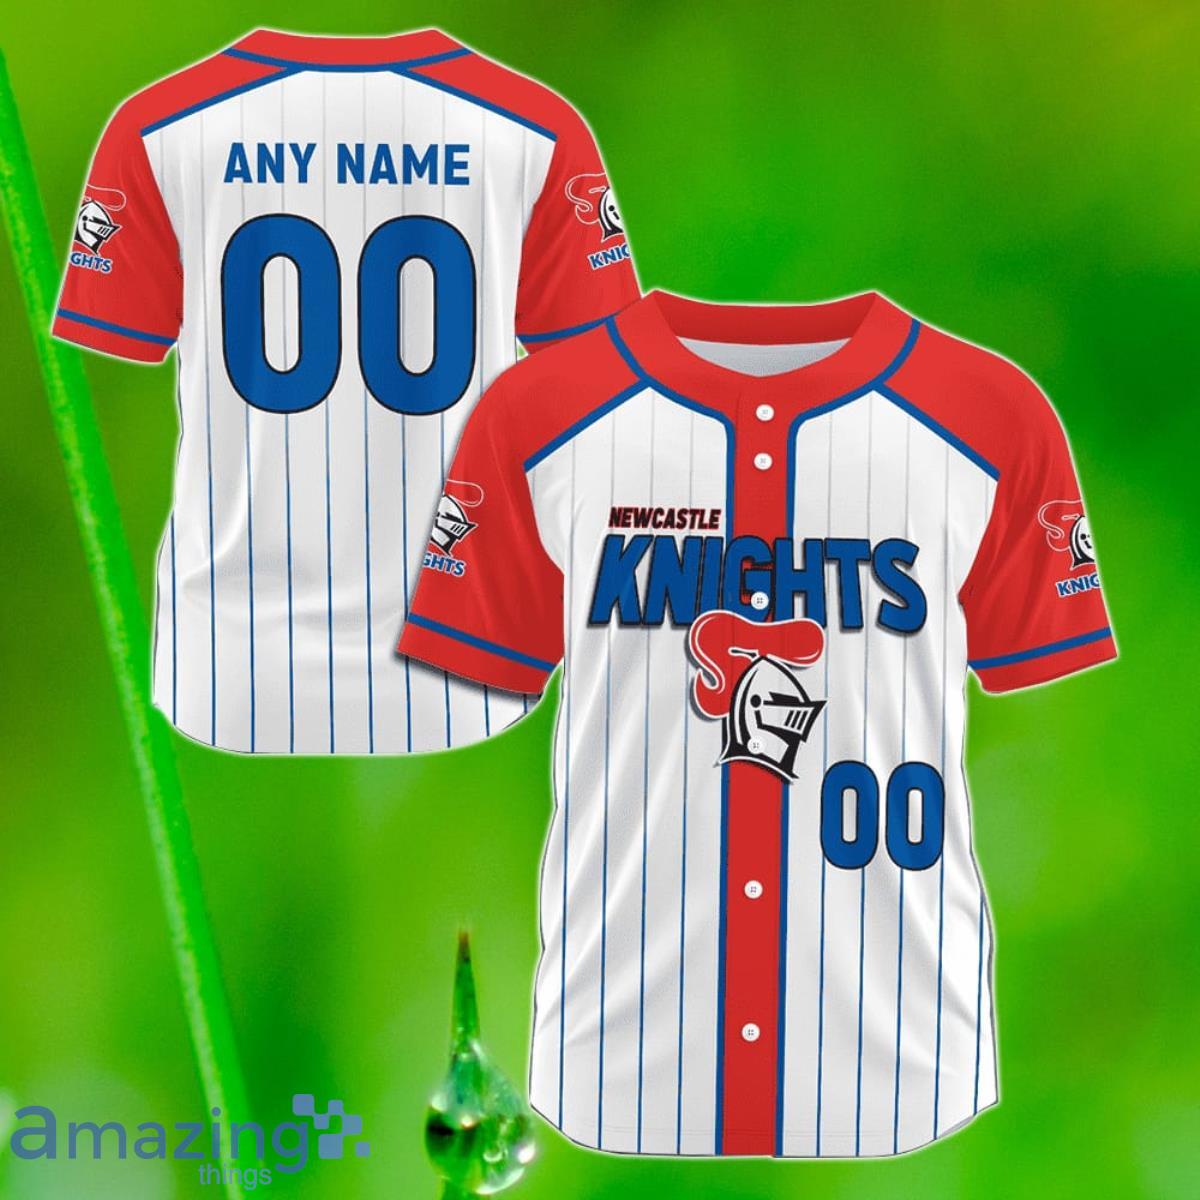 Newcastle Knights Custom Name & Number NRL Baseball Jersey Best